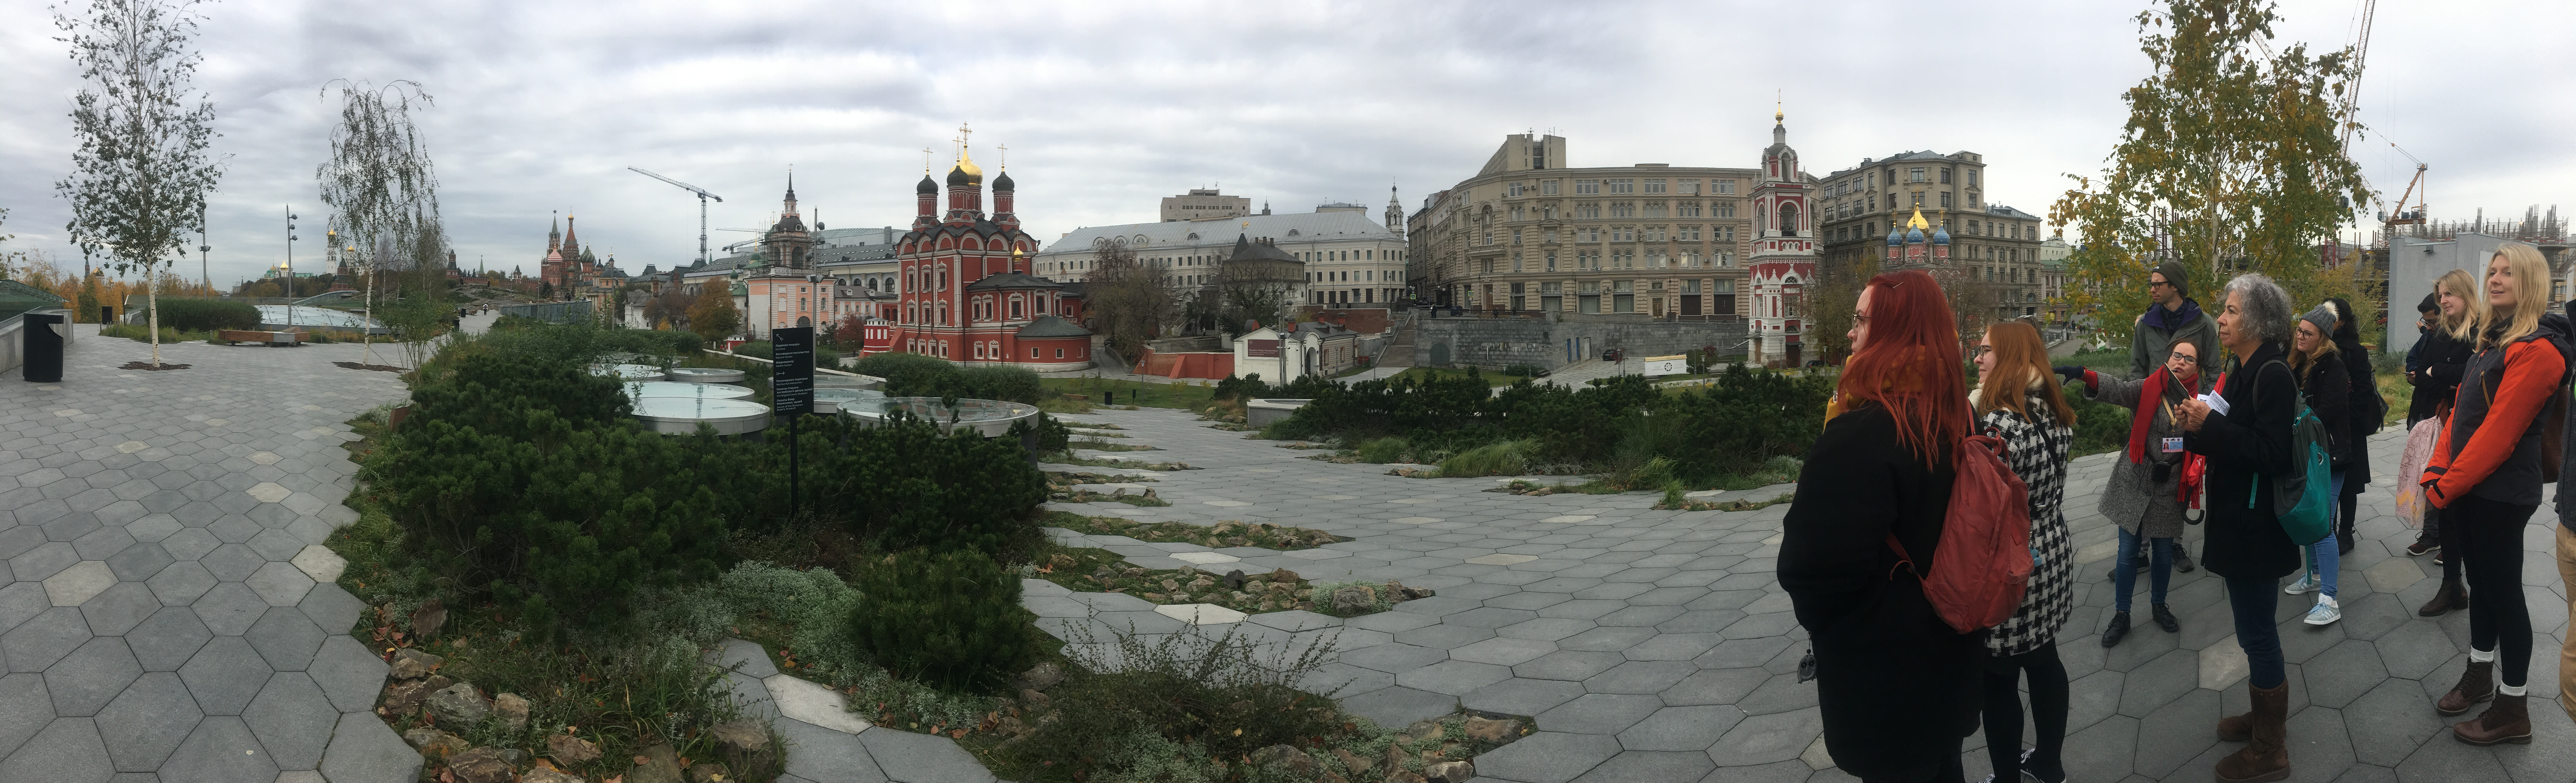 Zaryadye Park and tour group looking towards Kremlin